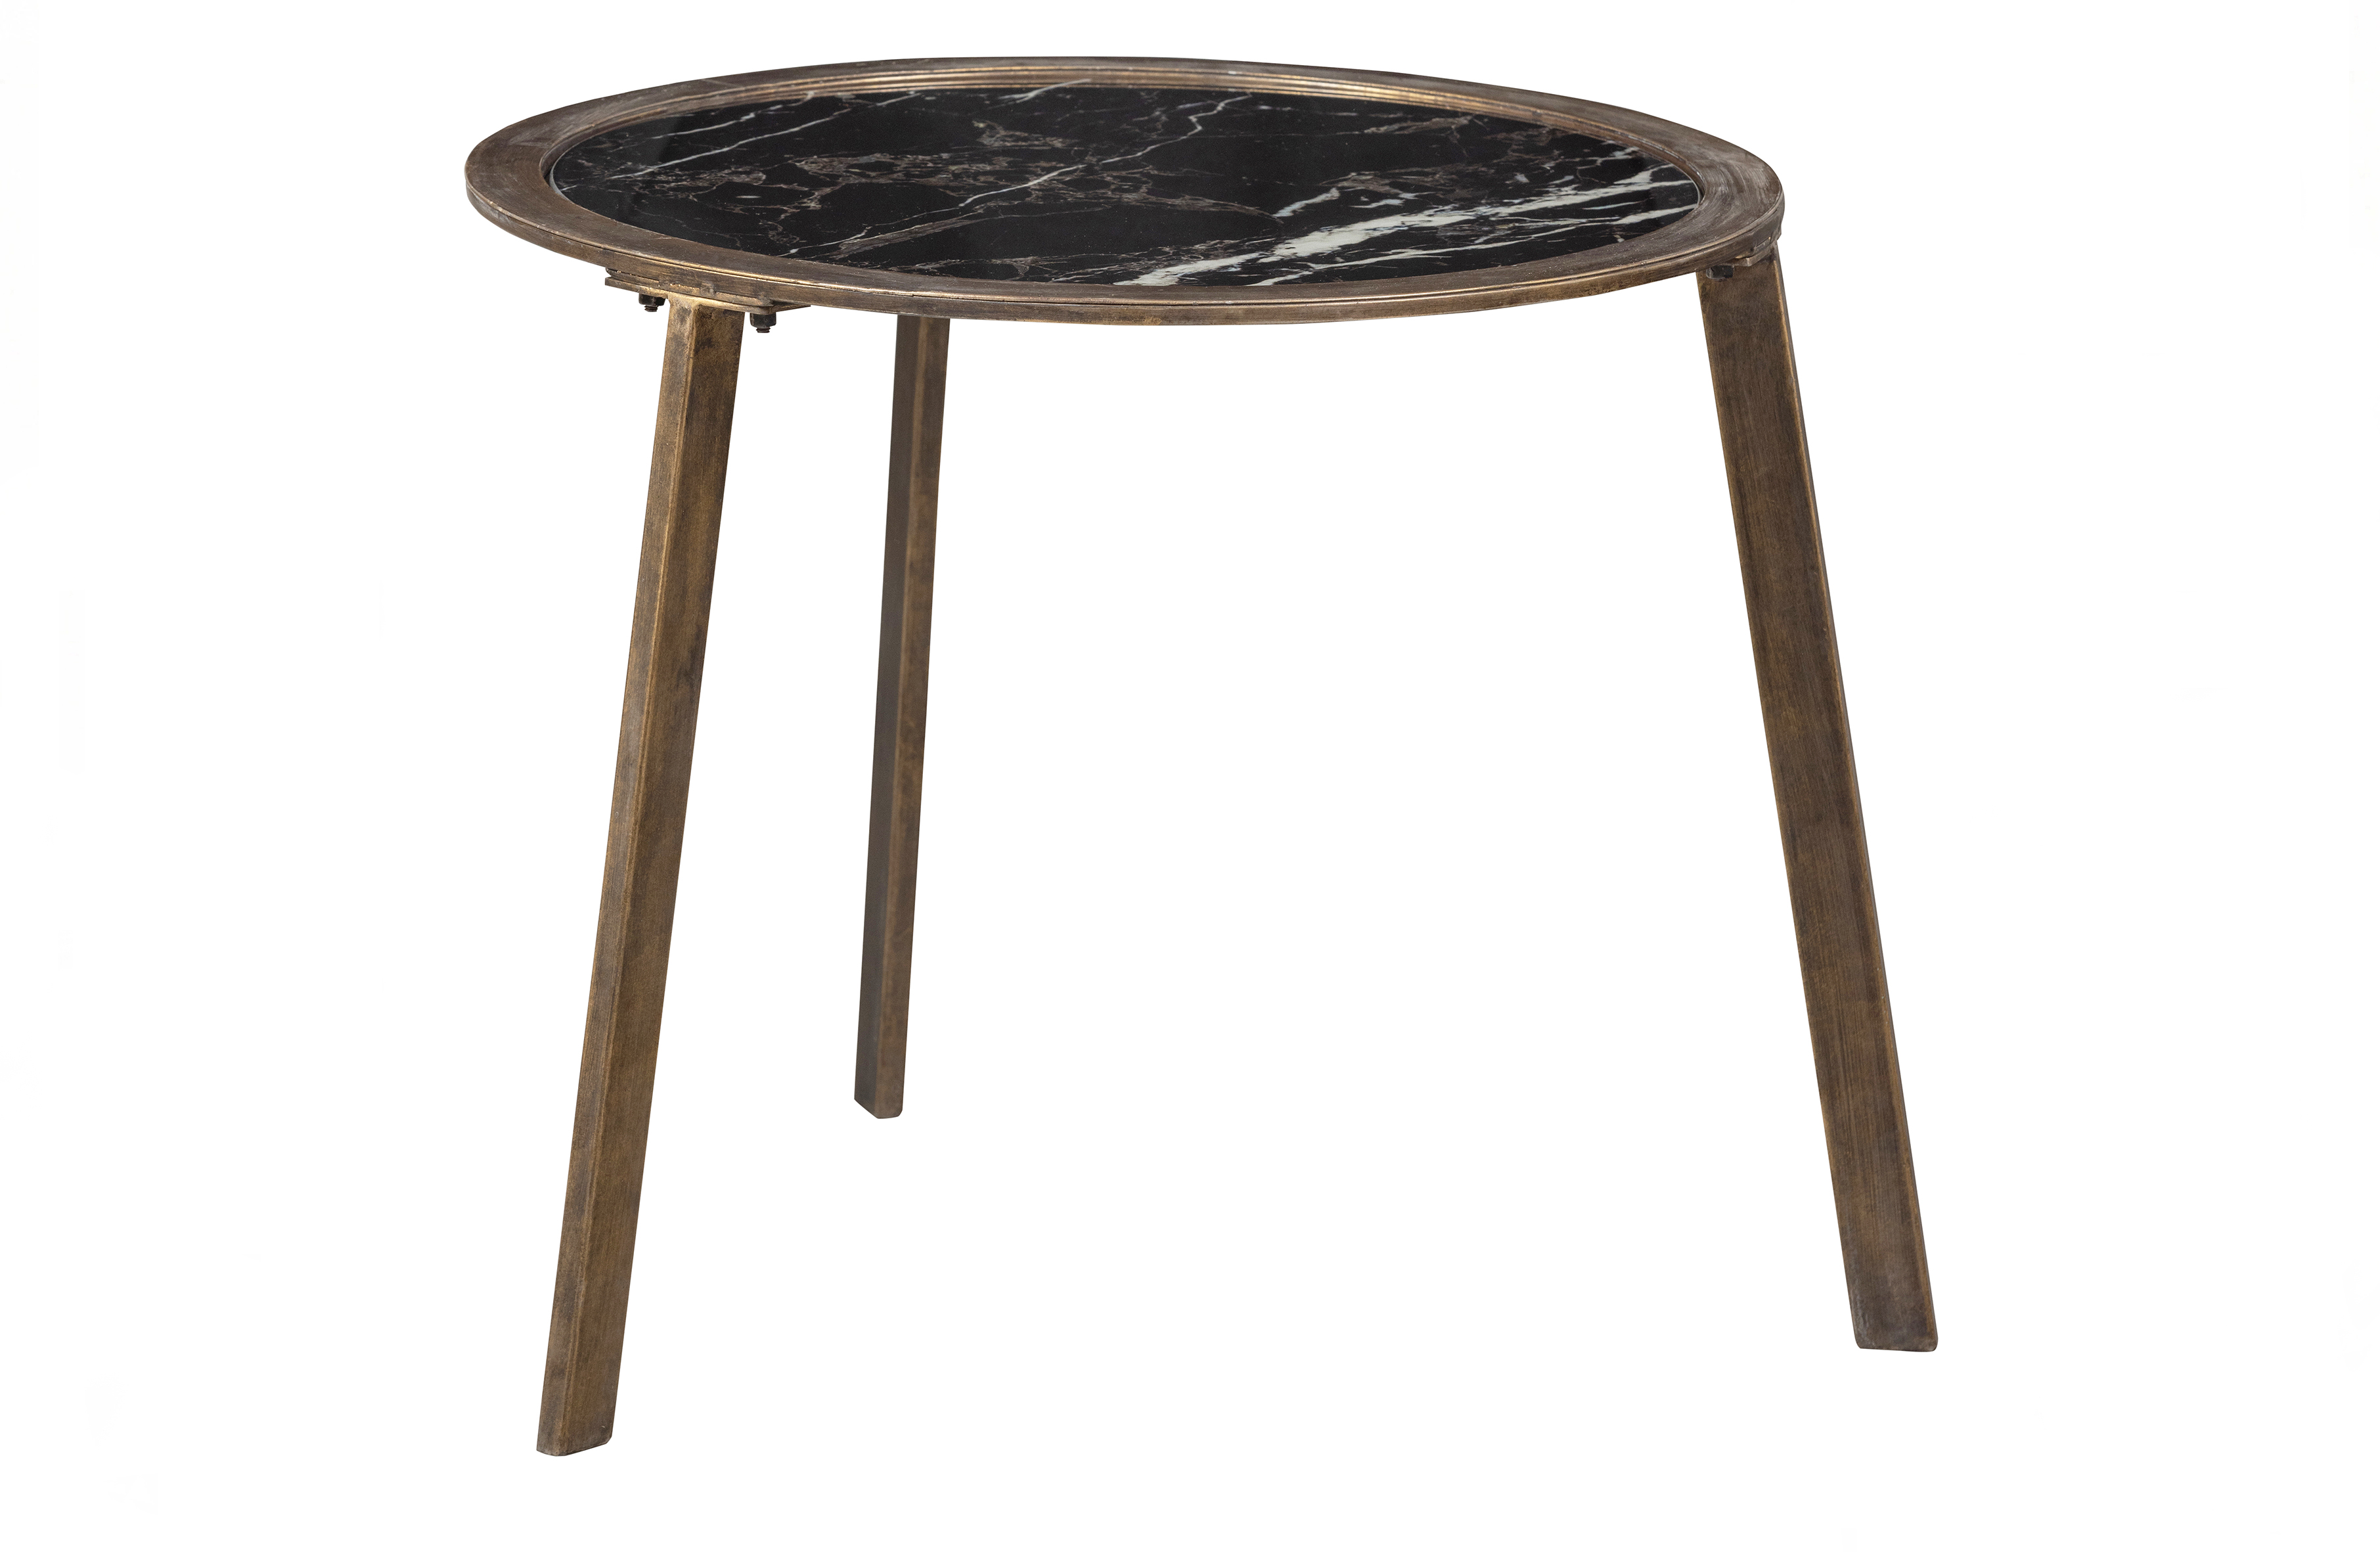 BEPUREHOME Lax sofabord, rund - sort glas og antik messing metal (Ø58)